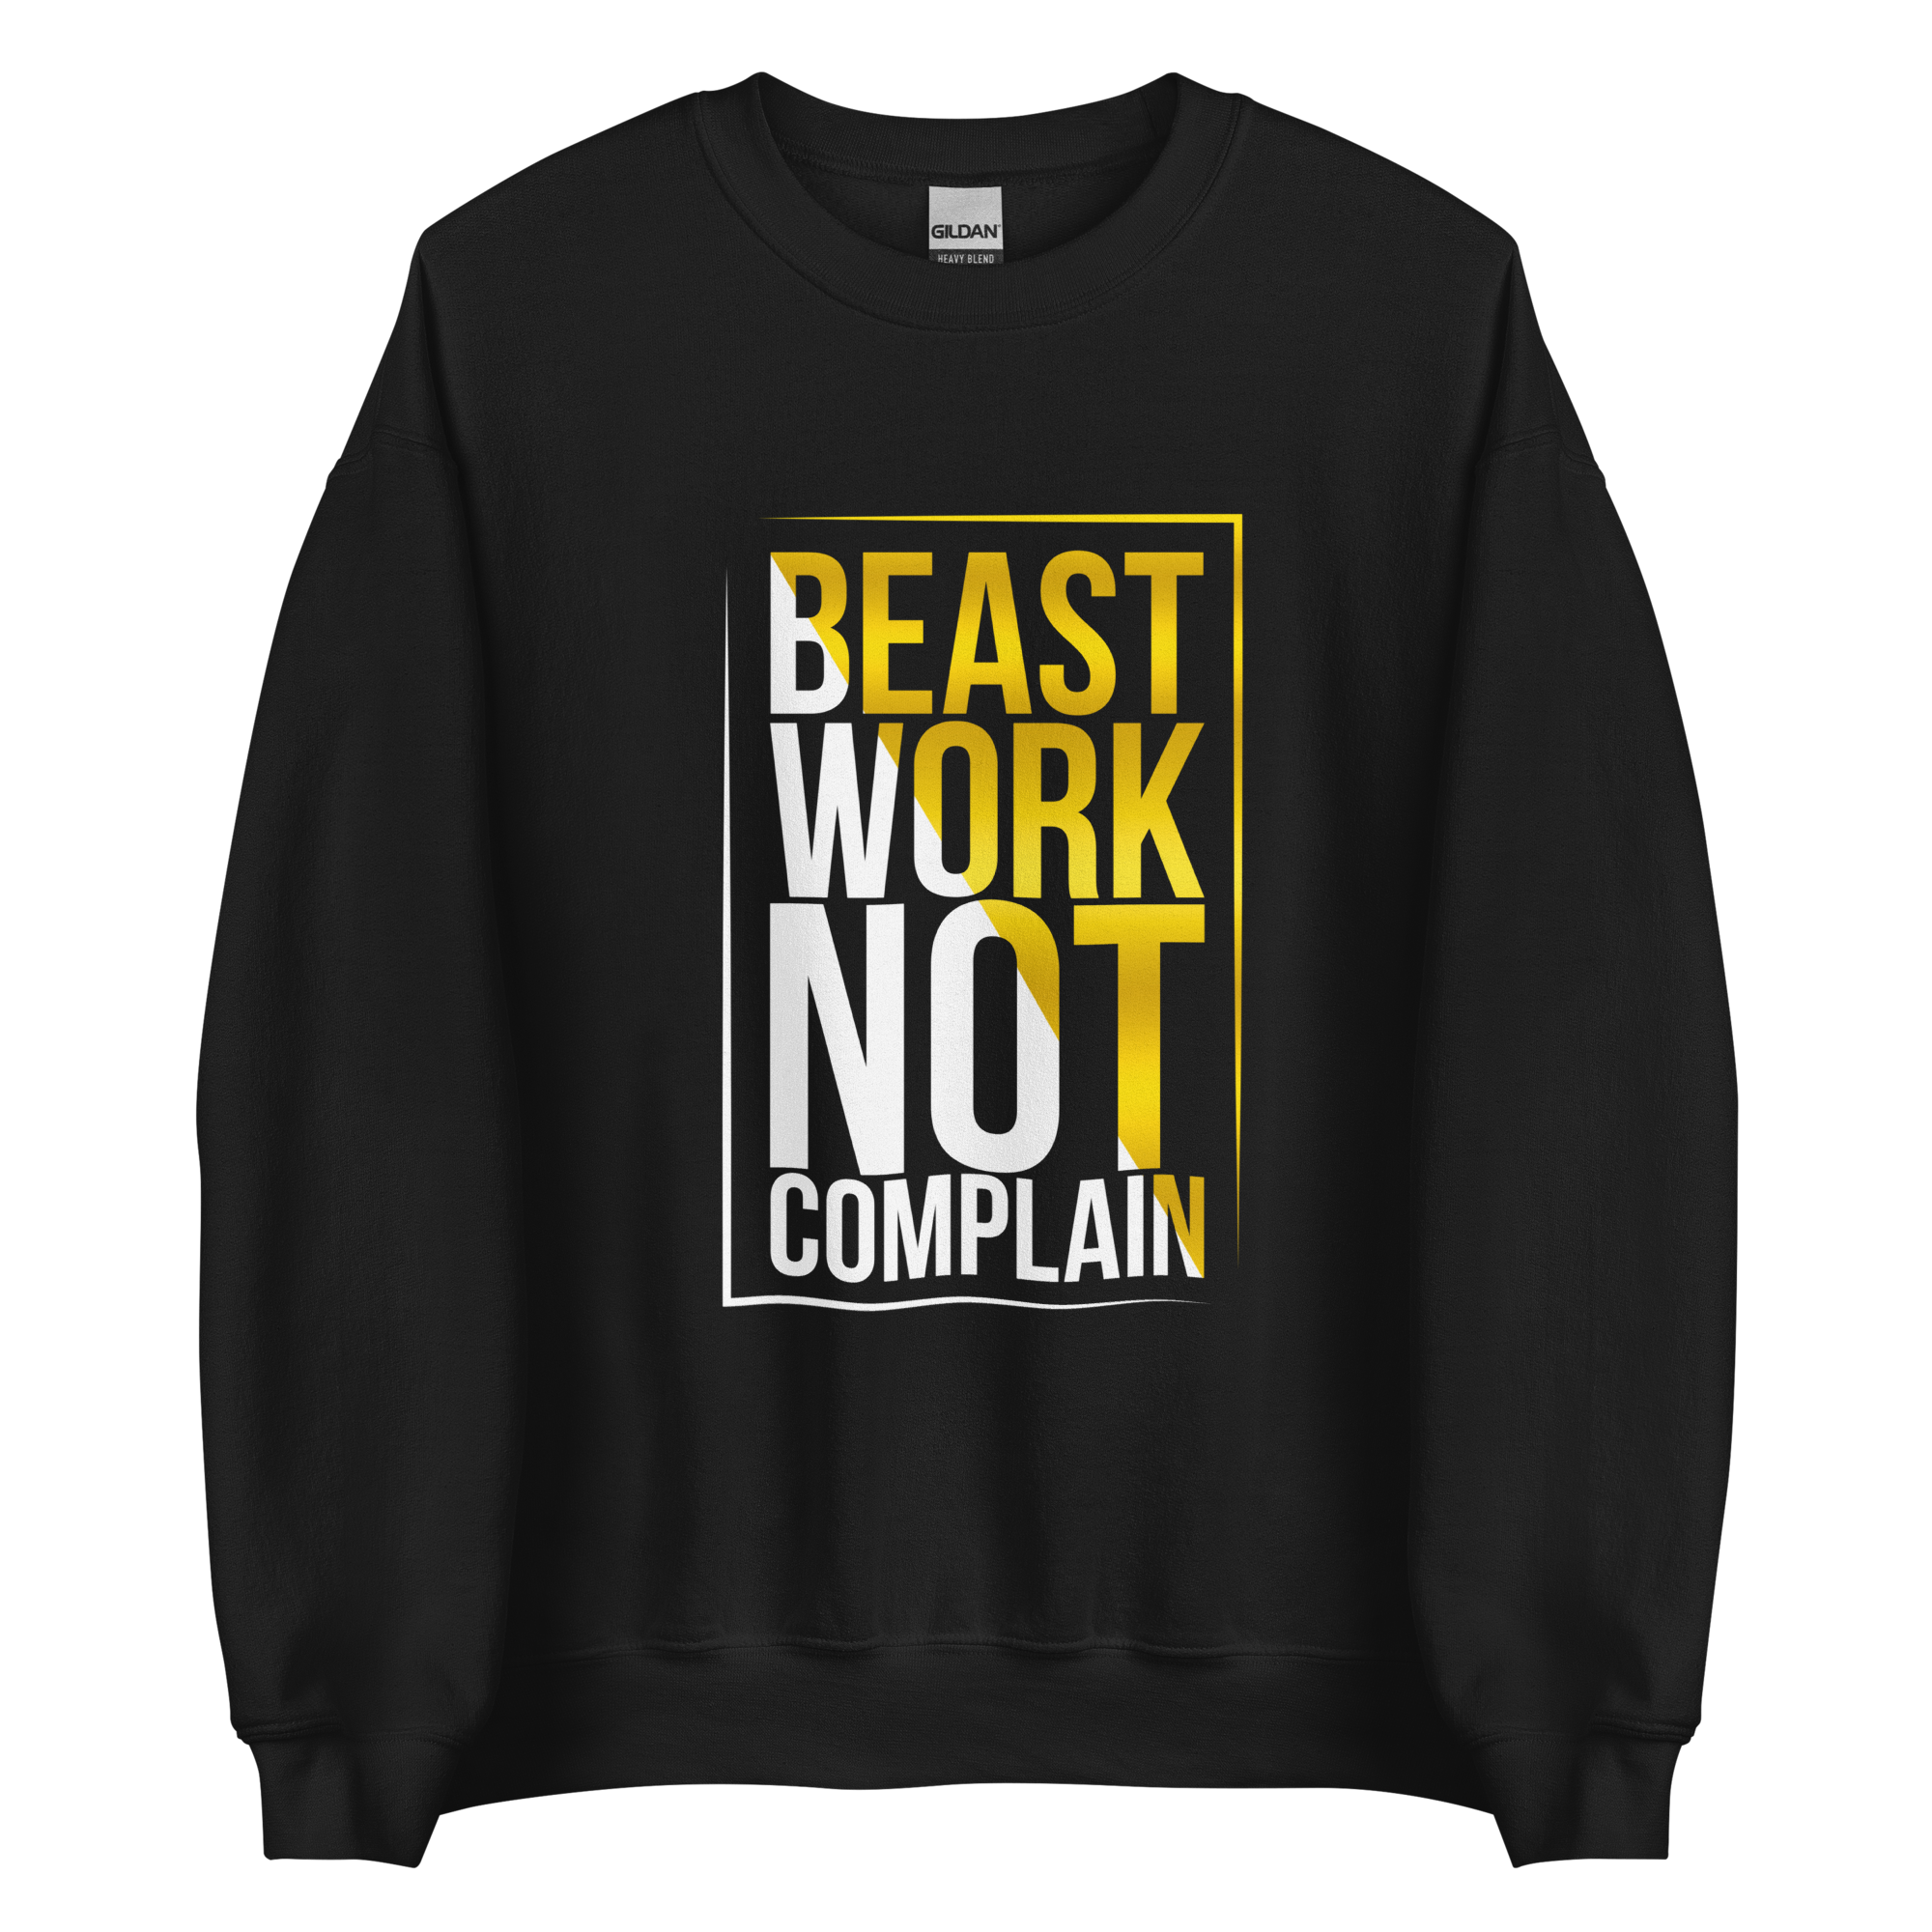 Beast Work Not Complain Unisex Sweatshirt